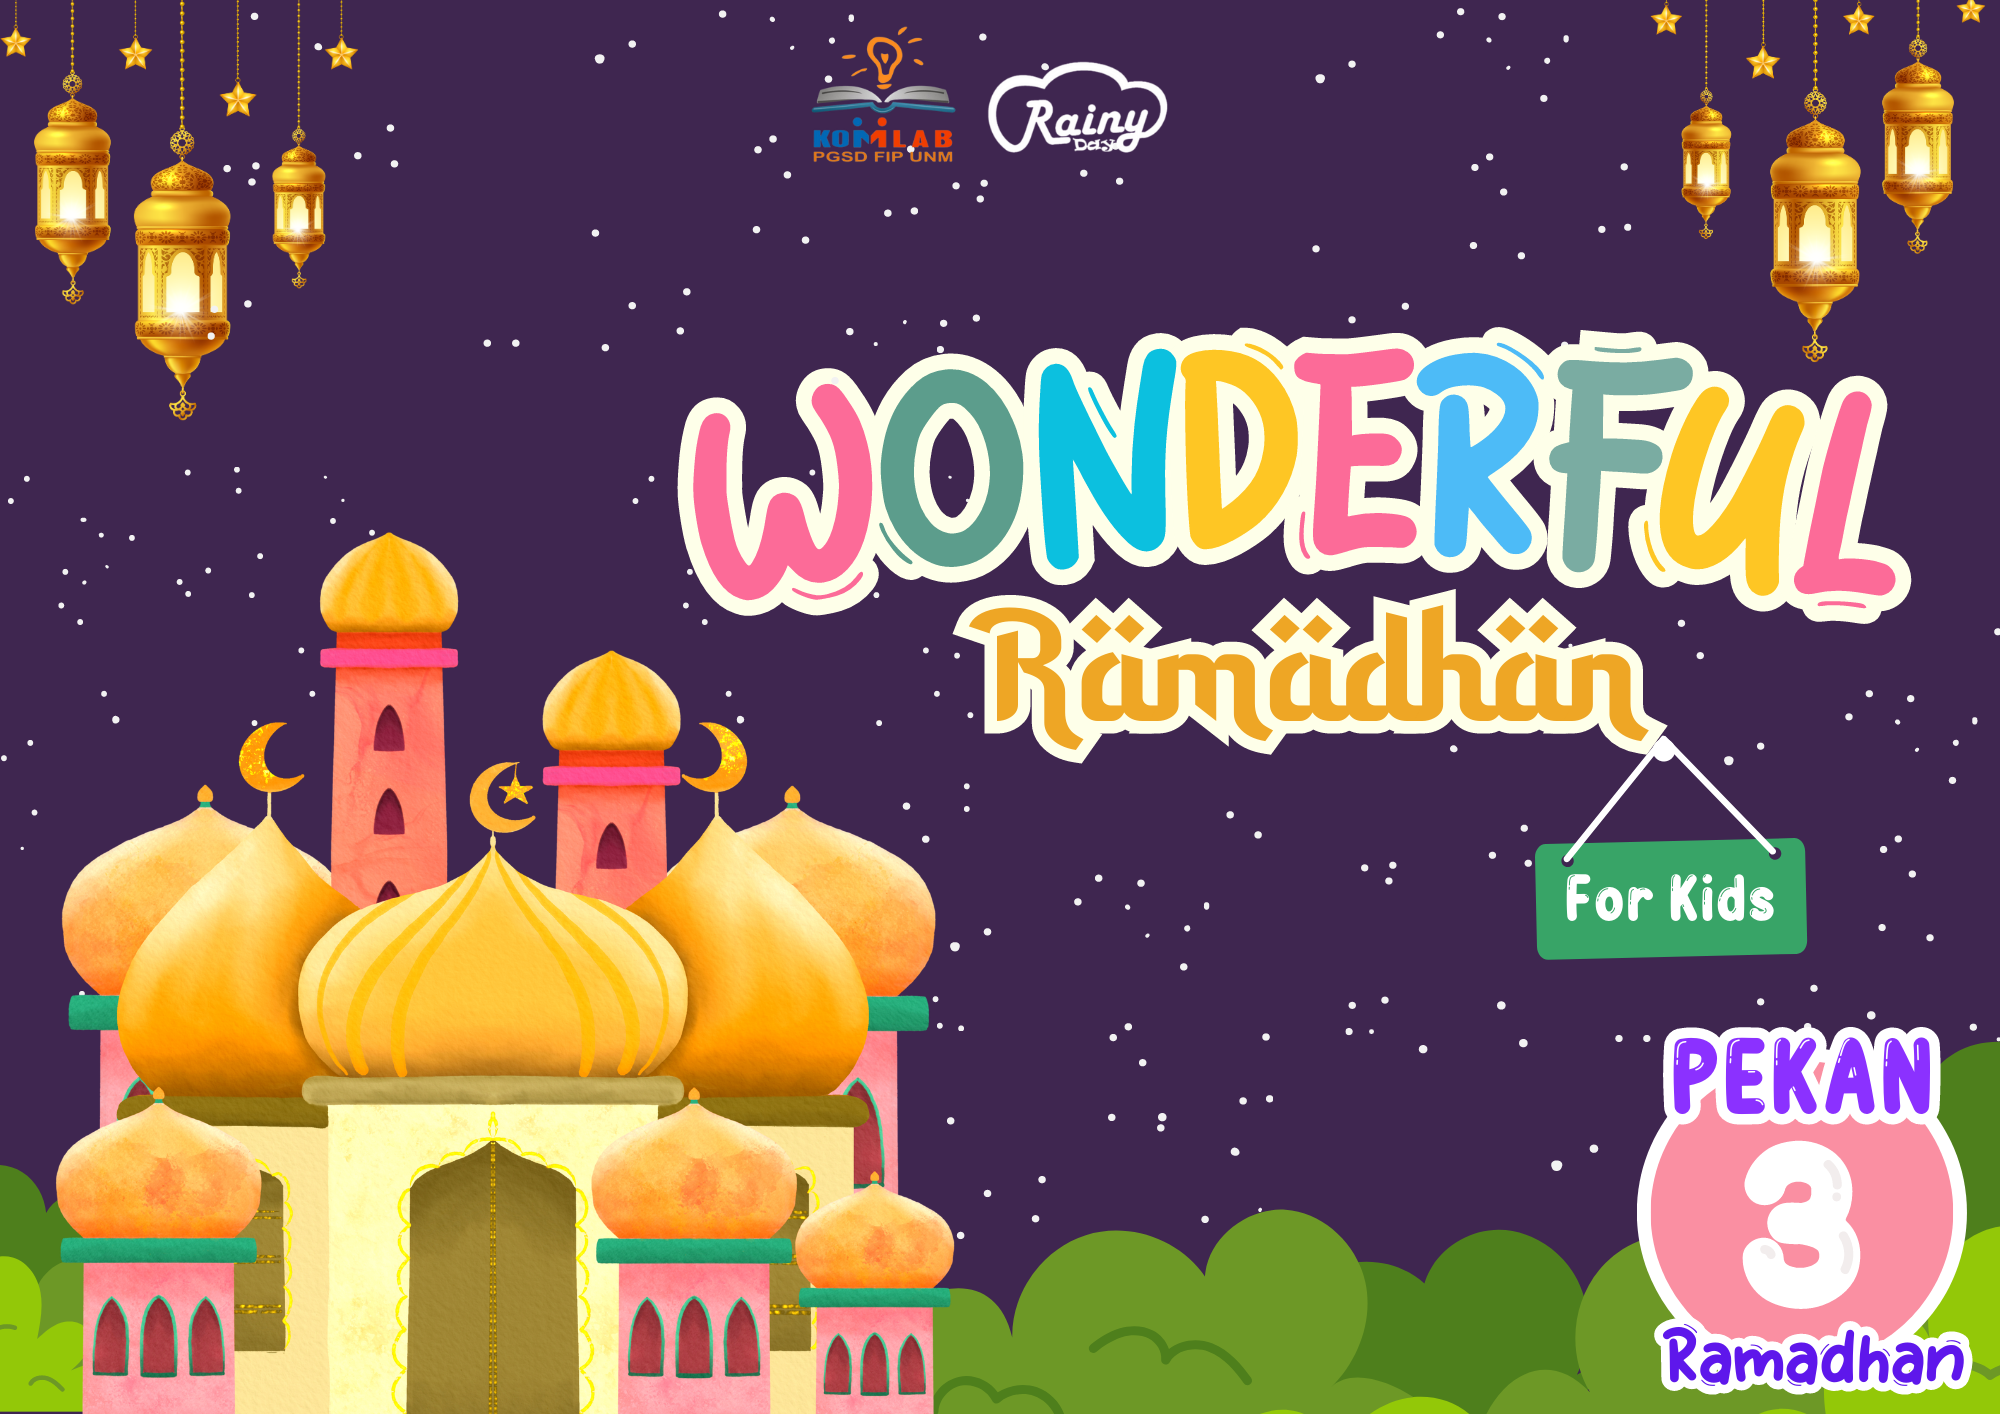 Wonderful Ramadhan 3